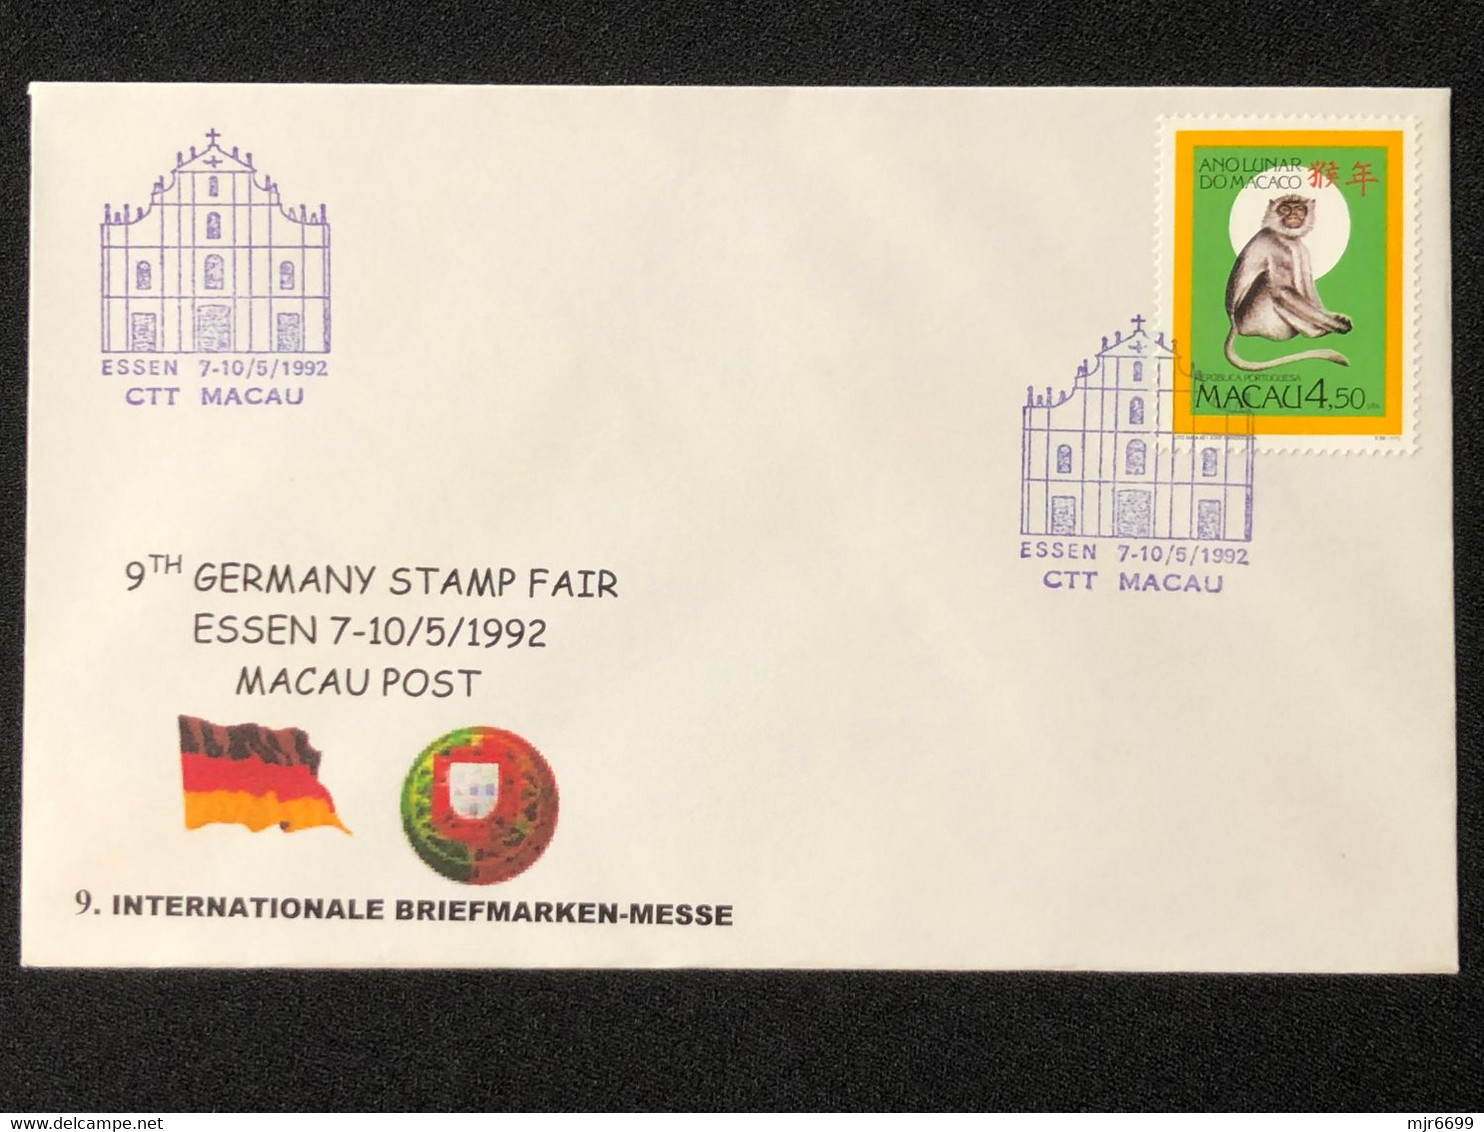 MACAU 9TH GERMANY STAMP FAIR 92 ESSEN COMMEMORATIVE CANCELLATION ON COVER - Briefe U. Dokumente